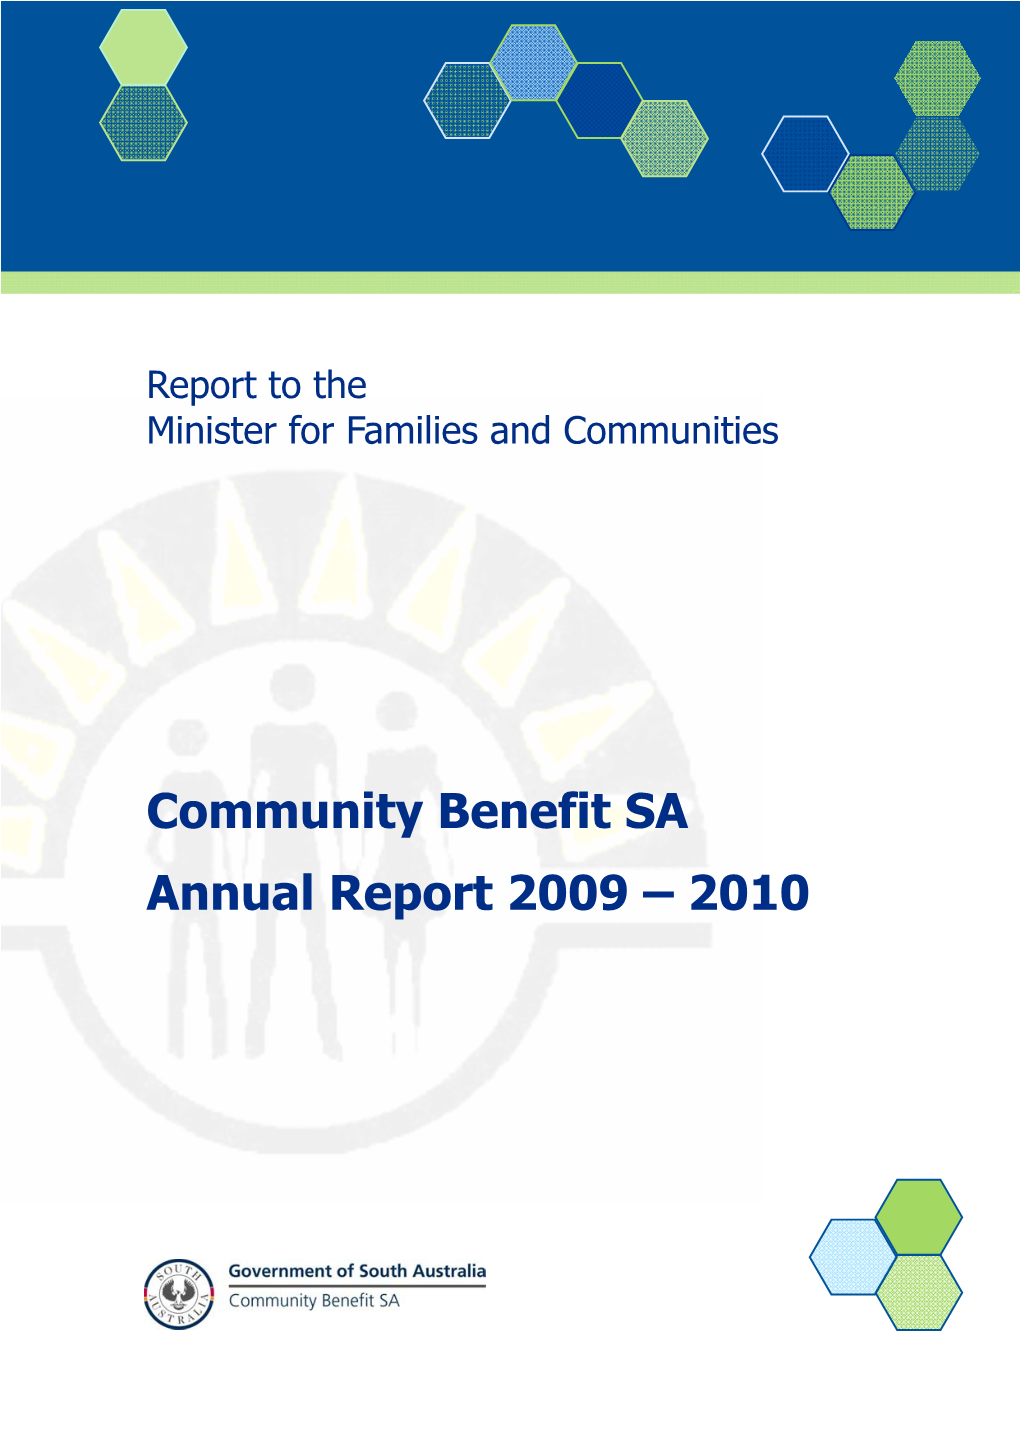 Community Benefit SA Annual Report 2009 – 2010